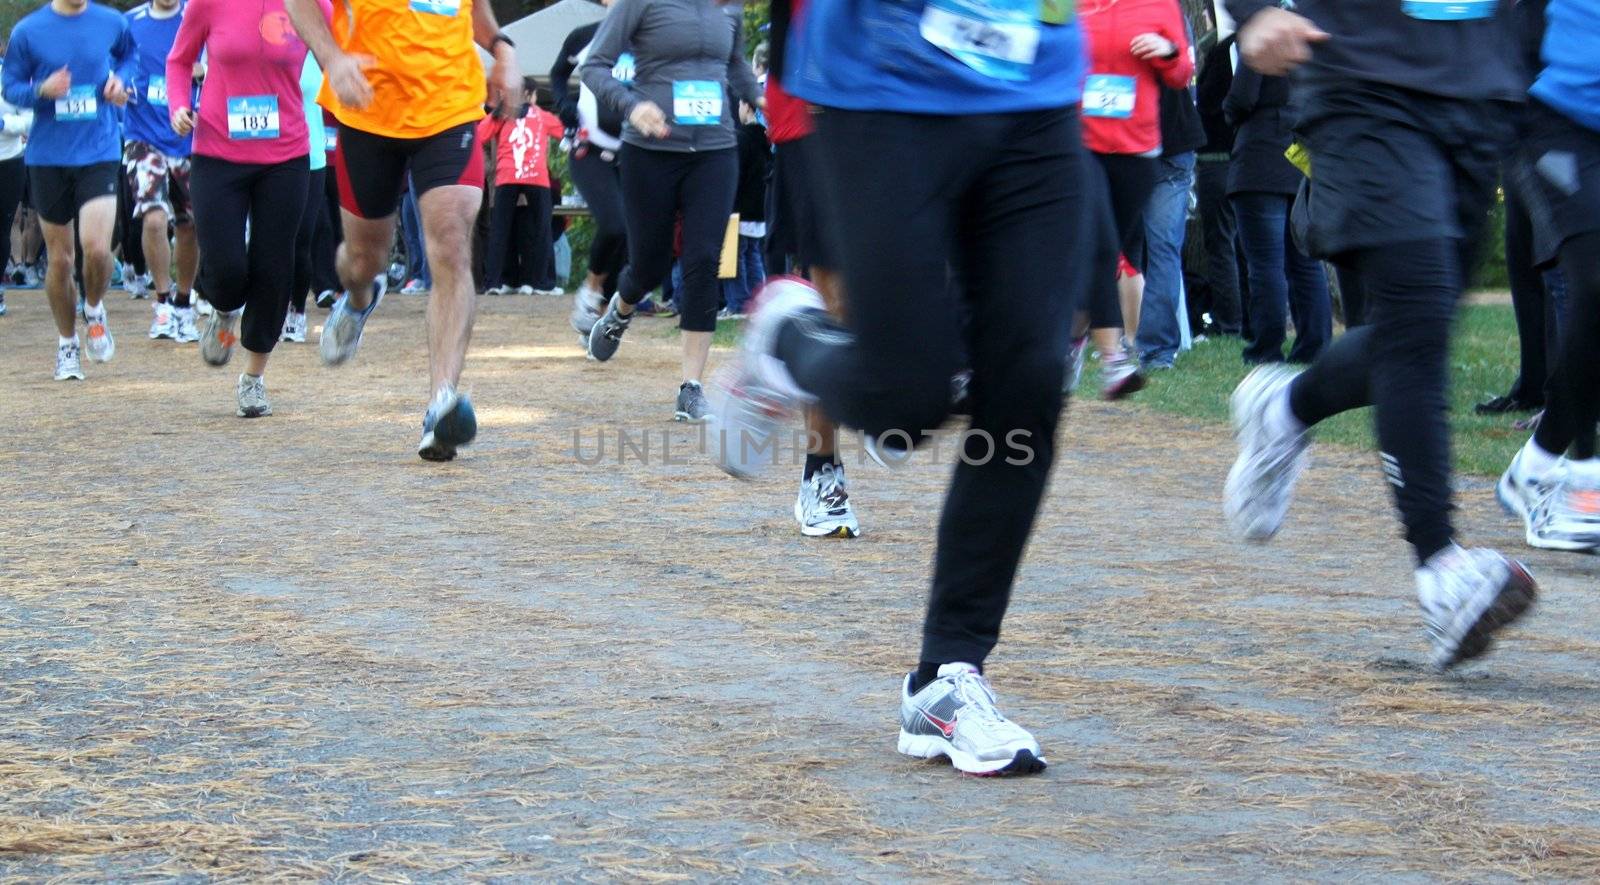 Runners in a charity marathon